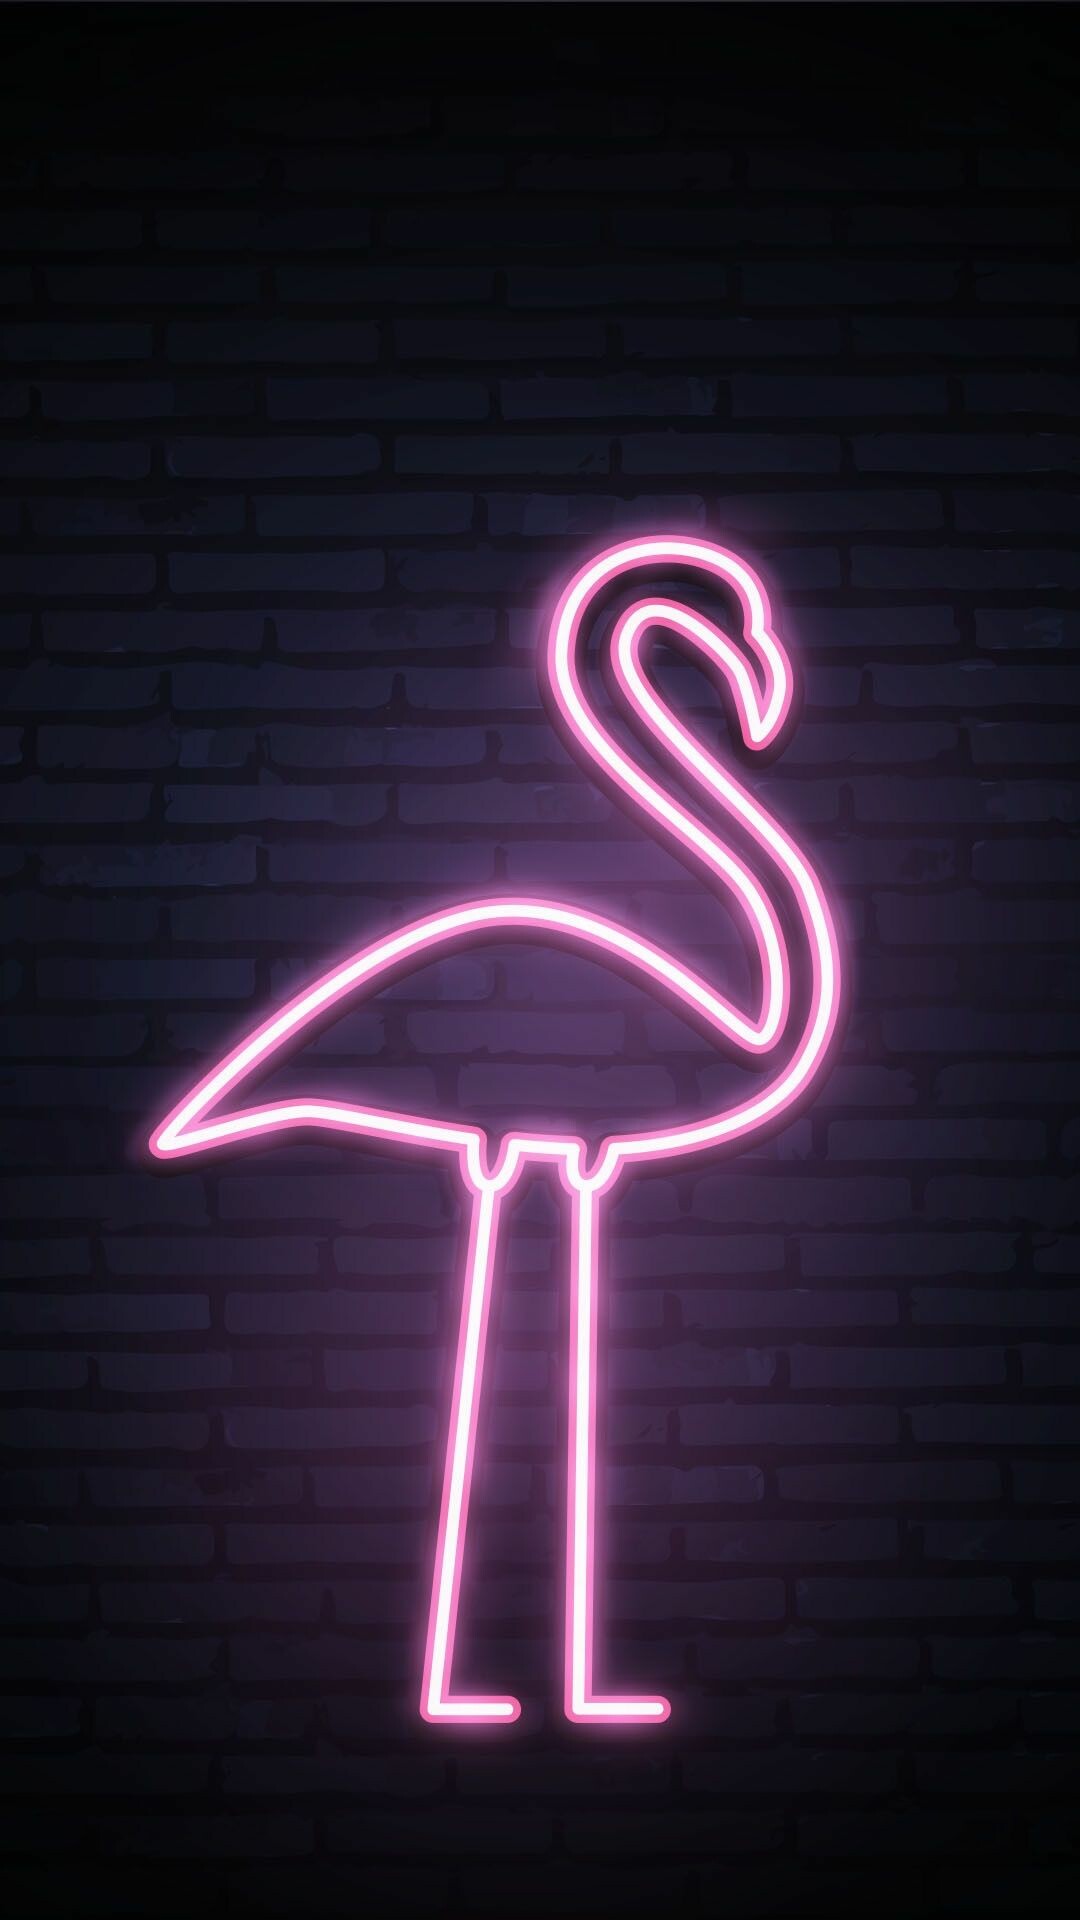 Flamingo: A pink wading bird, Minimalistic. 1080x1920 Full HD Wallpaper.